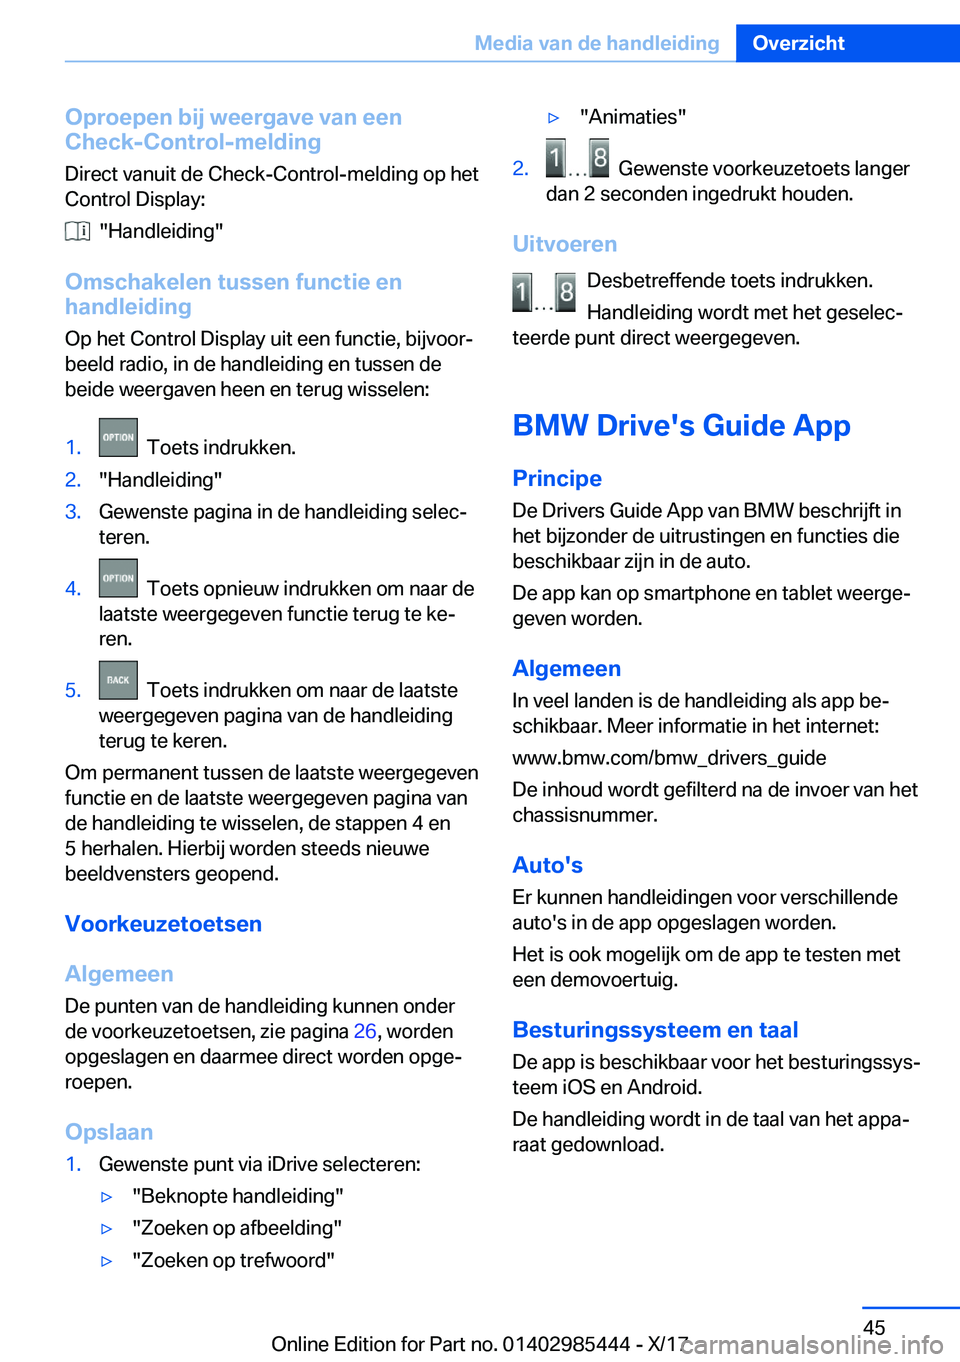 BMW X1 2018  Instructieboekjes (in Dutch) �O�p�r�o�e�p�e�n��b�i�j��w�e�e�r�g�a�v�e��v�a�n��e�e�n
�C�h�e�c�k�-�C�o�n�t�r�o�l�-�m�e�l�d�i�n�g
�D�i�r�e�c�t� �v�a�n�u�i�t� �d�e� �C�h�e�c�k�-�C�o�n�t�r�o�l�-�m�e�l�d�i�n�g� �o�p� �h�e�t
�C�o�n�